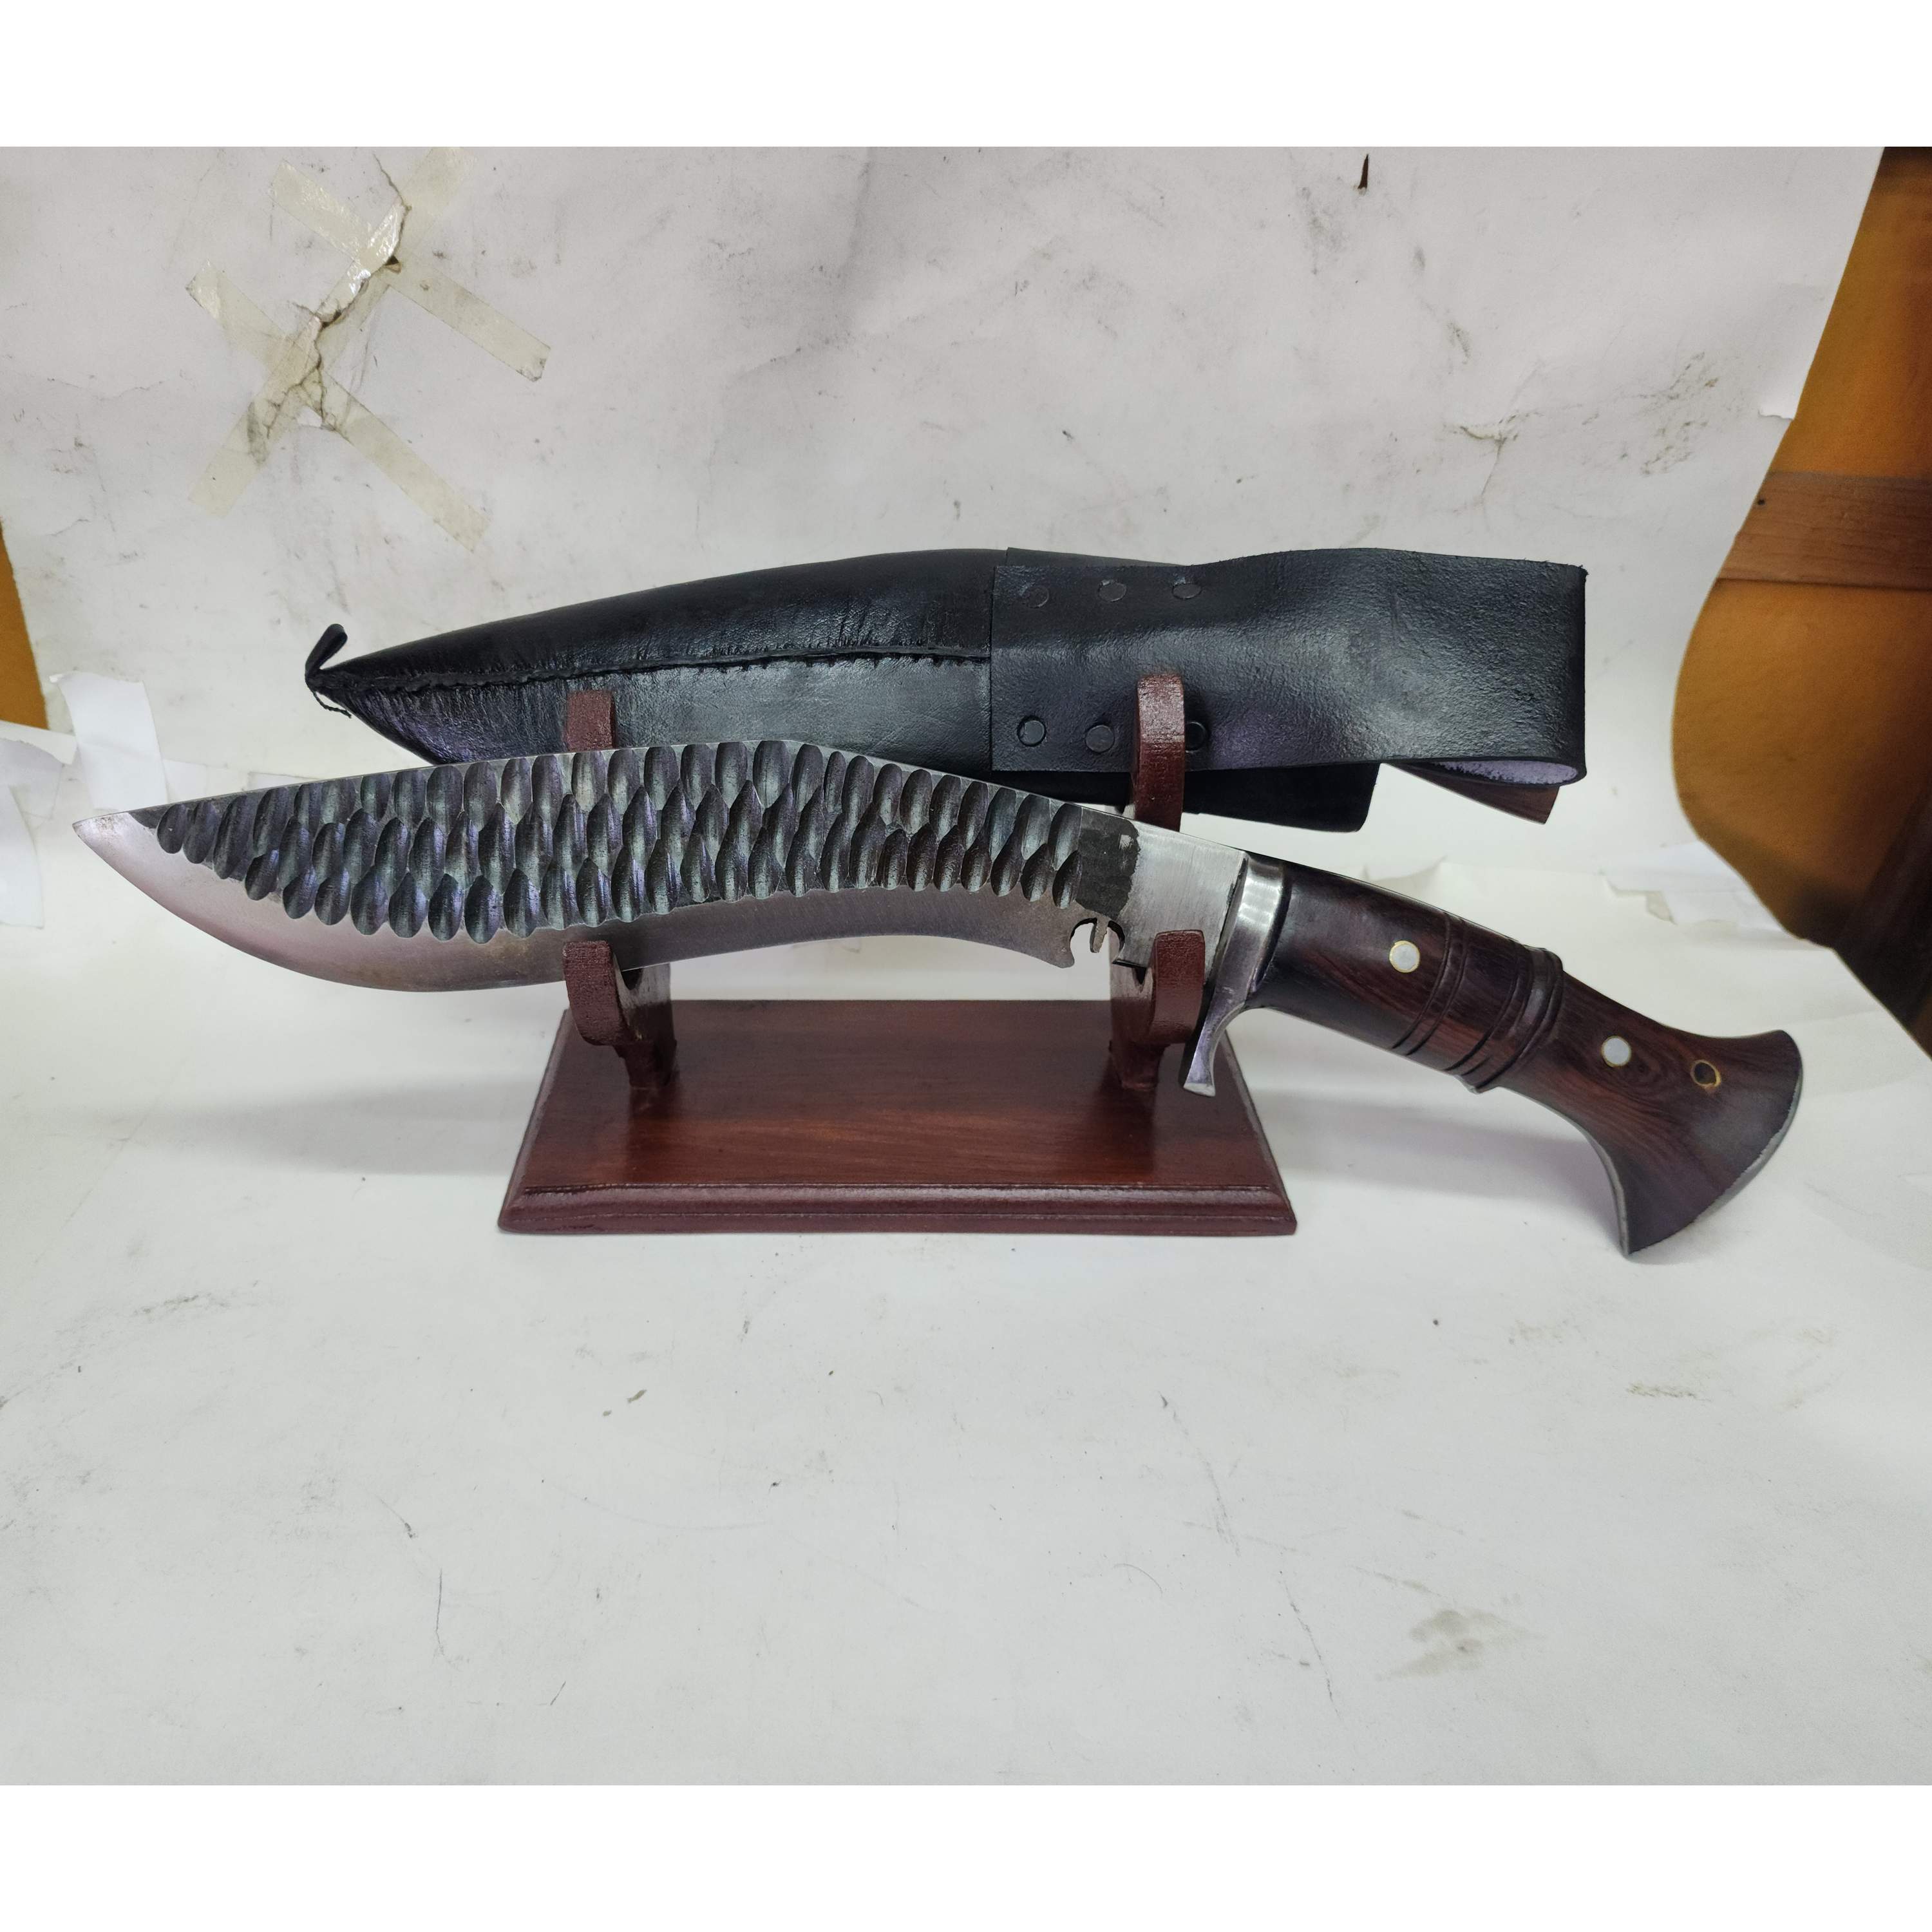 10 Inch, khukuri, Gurkha Knife With Leather Cover And Stand, Nepali Machete